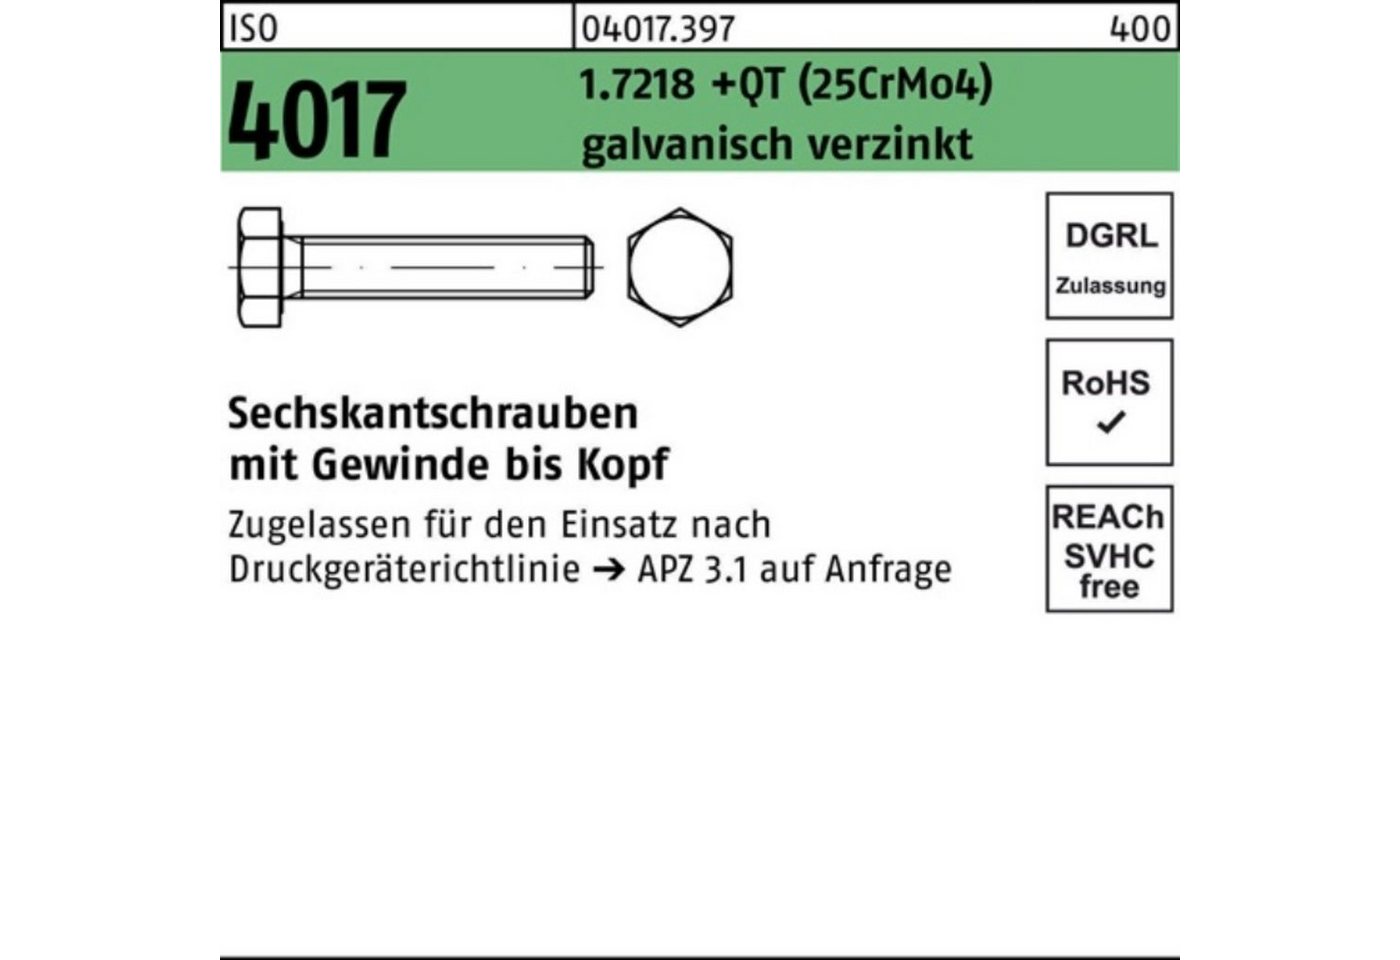 Bufab Sechskantschraube 100er Pack Sechskantschraube ISO 4017 VG M27x100 1.7218 +QT (25CrMo4) von Bufab